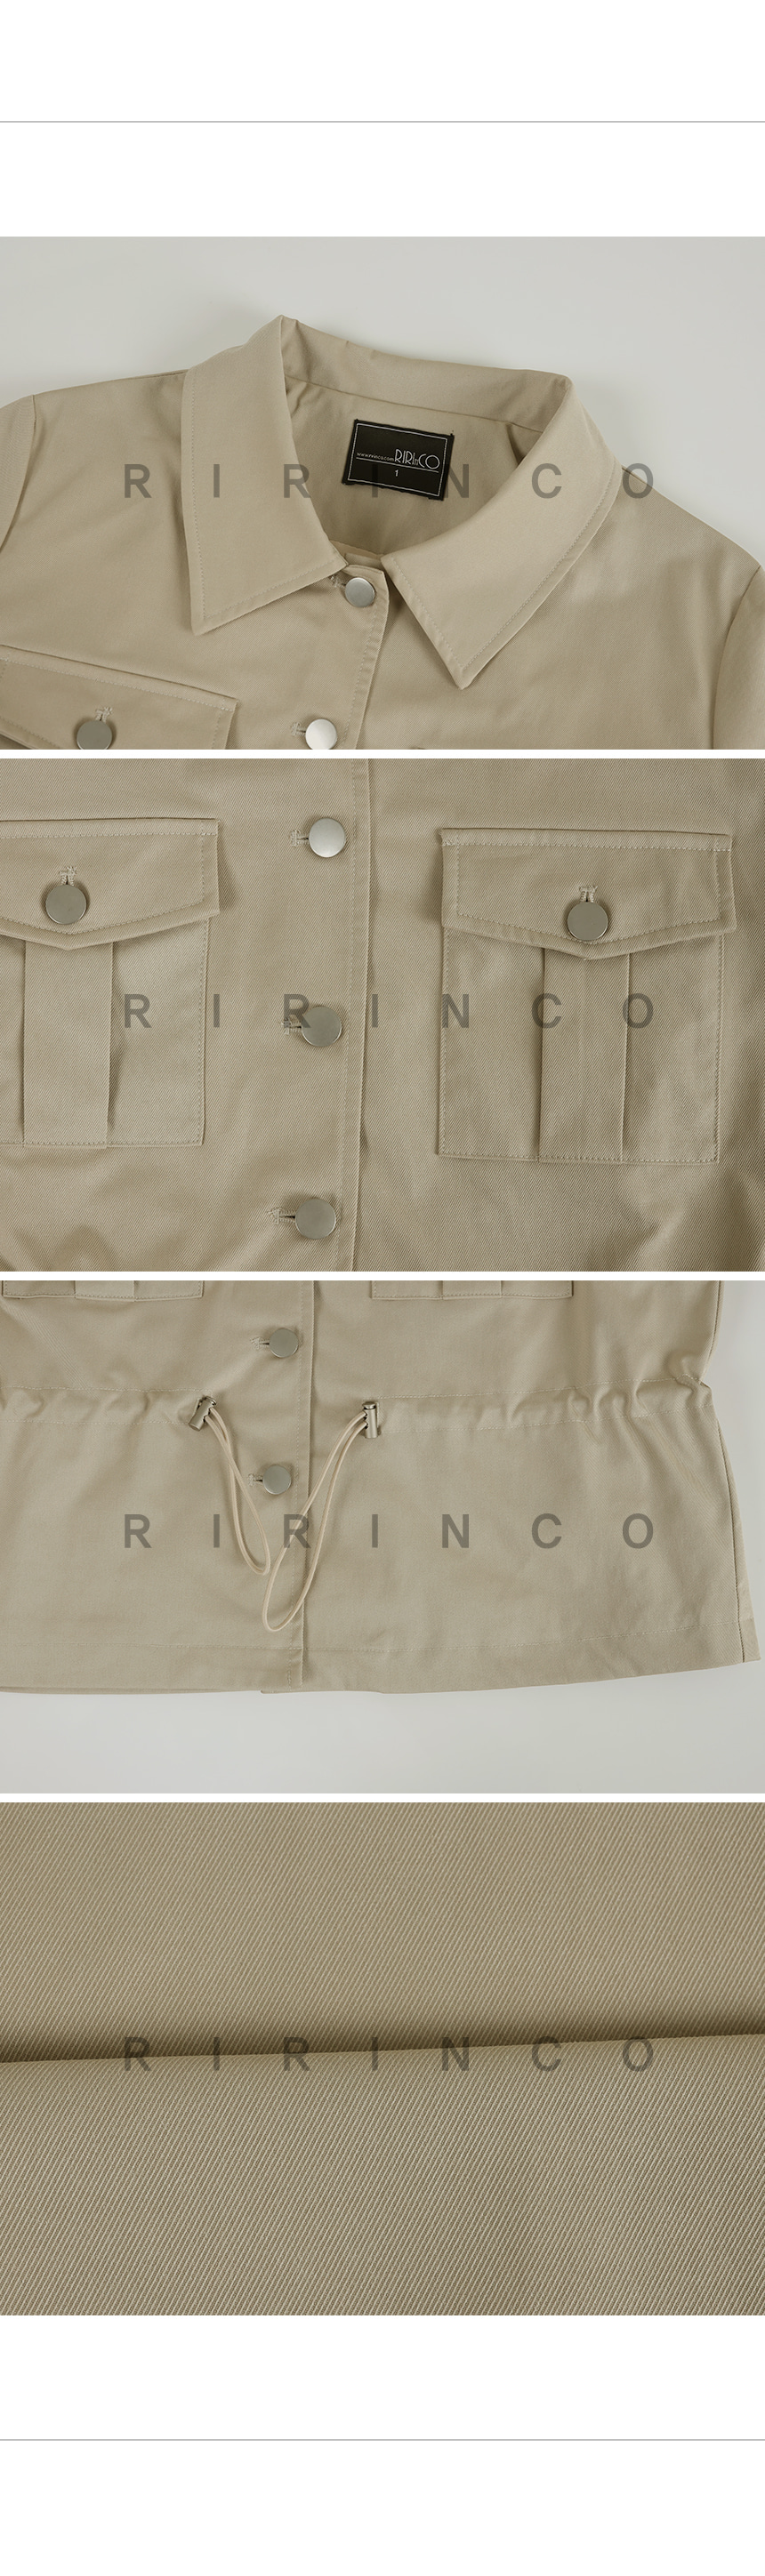 RIRINCO カラーネックポケットストリングジャケット